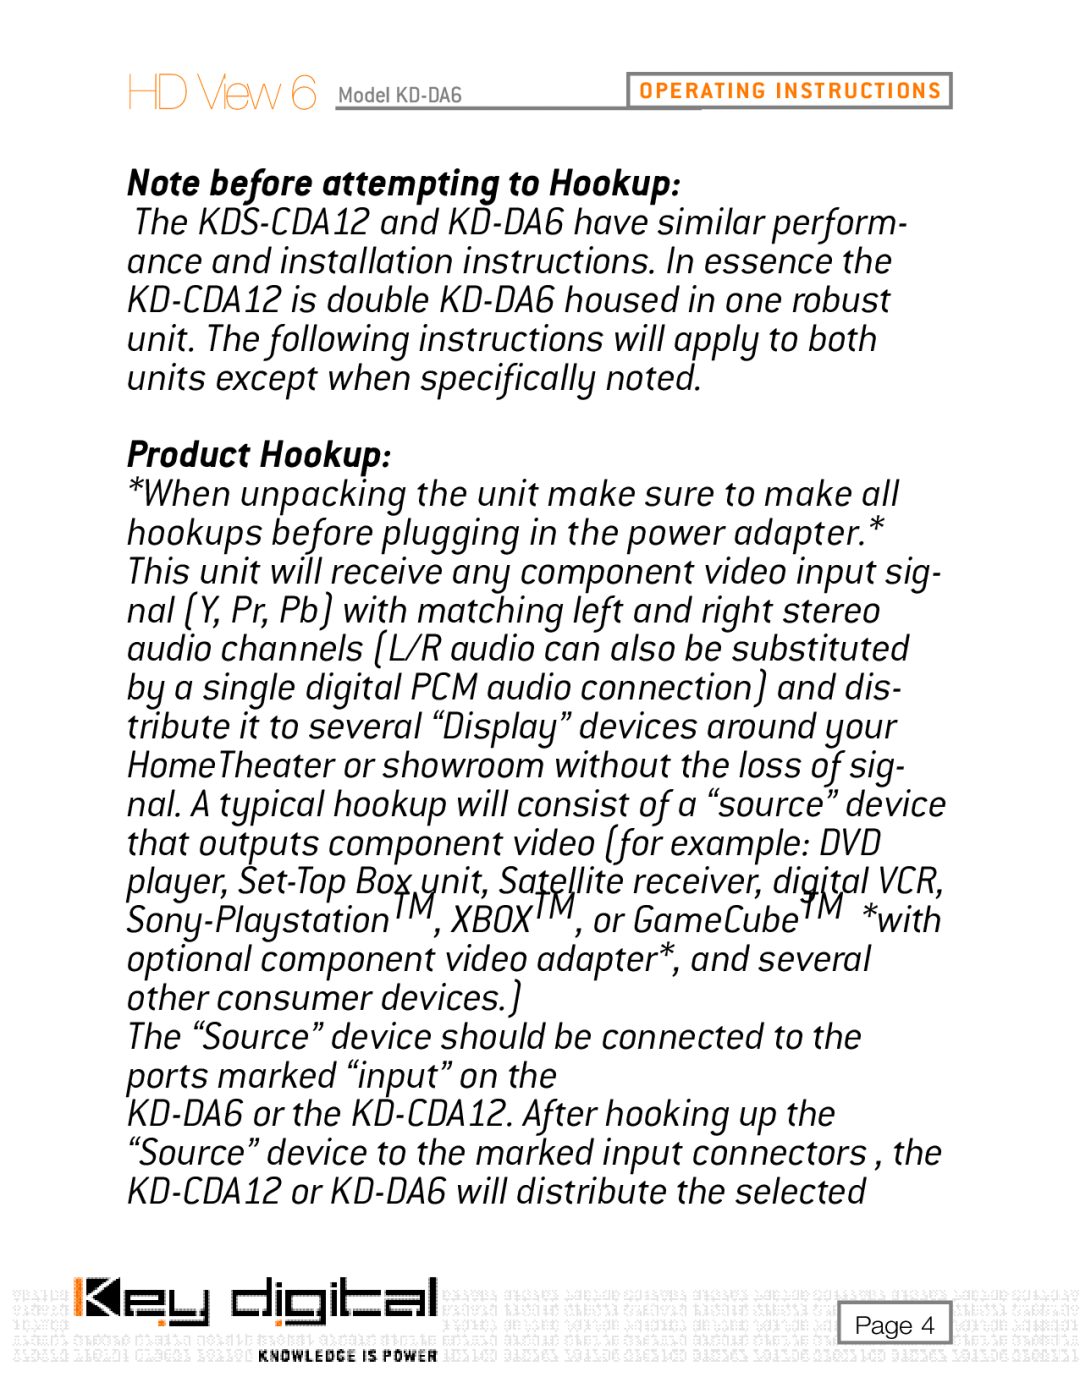 Key Digital KD-CDA12 user manual Note before attempting to Hookup, Product Hookup, HD View 6 Model KD-DA6 